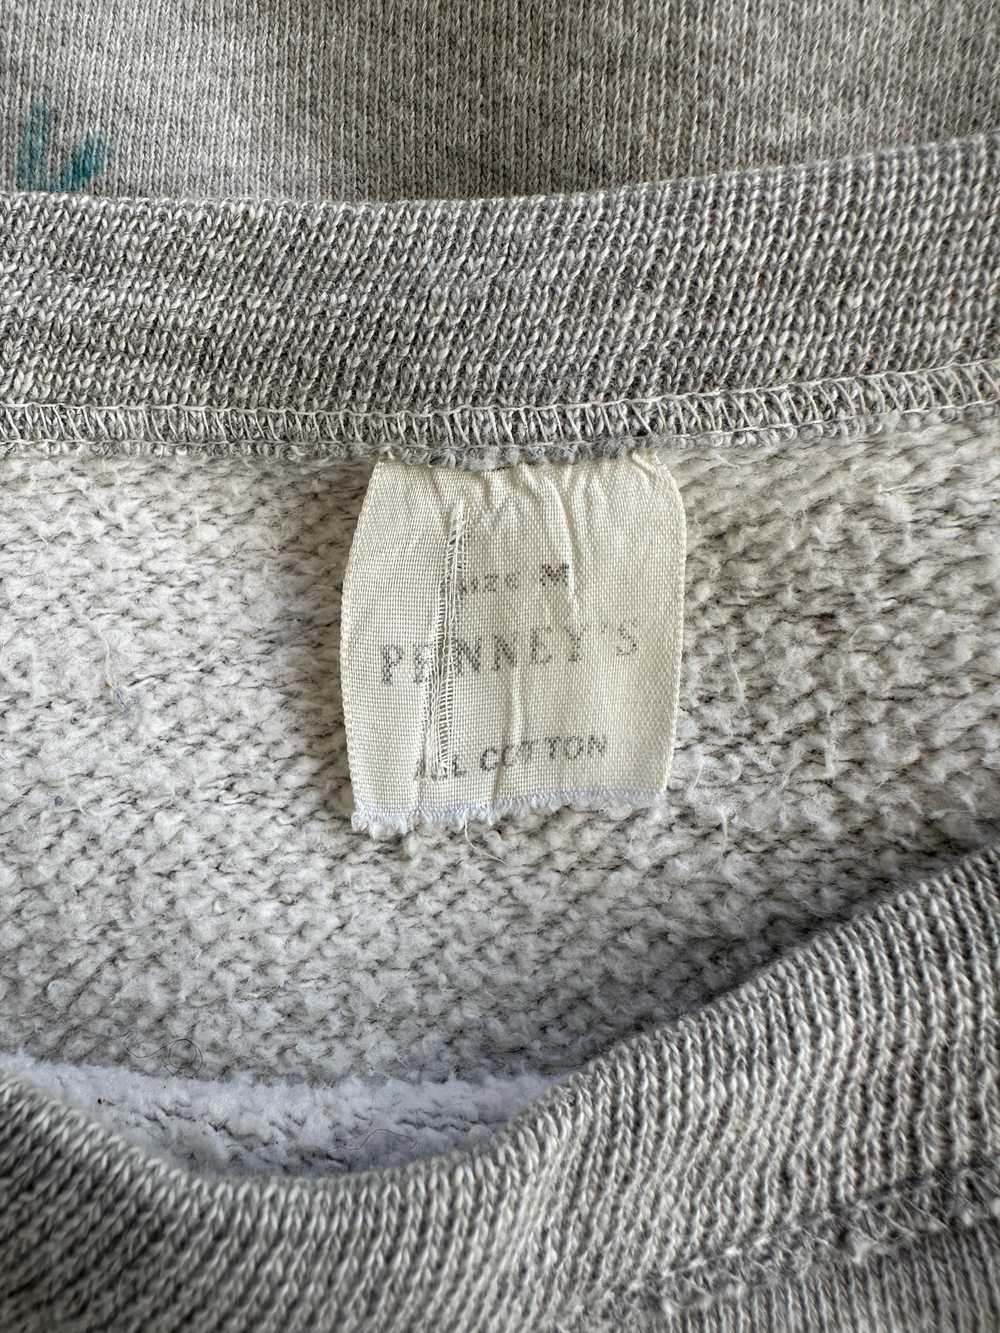 1950s JCPenny Senior Signature Sweatshirt - image 4